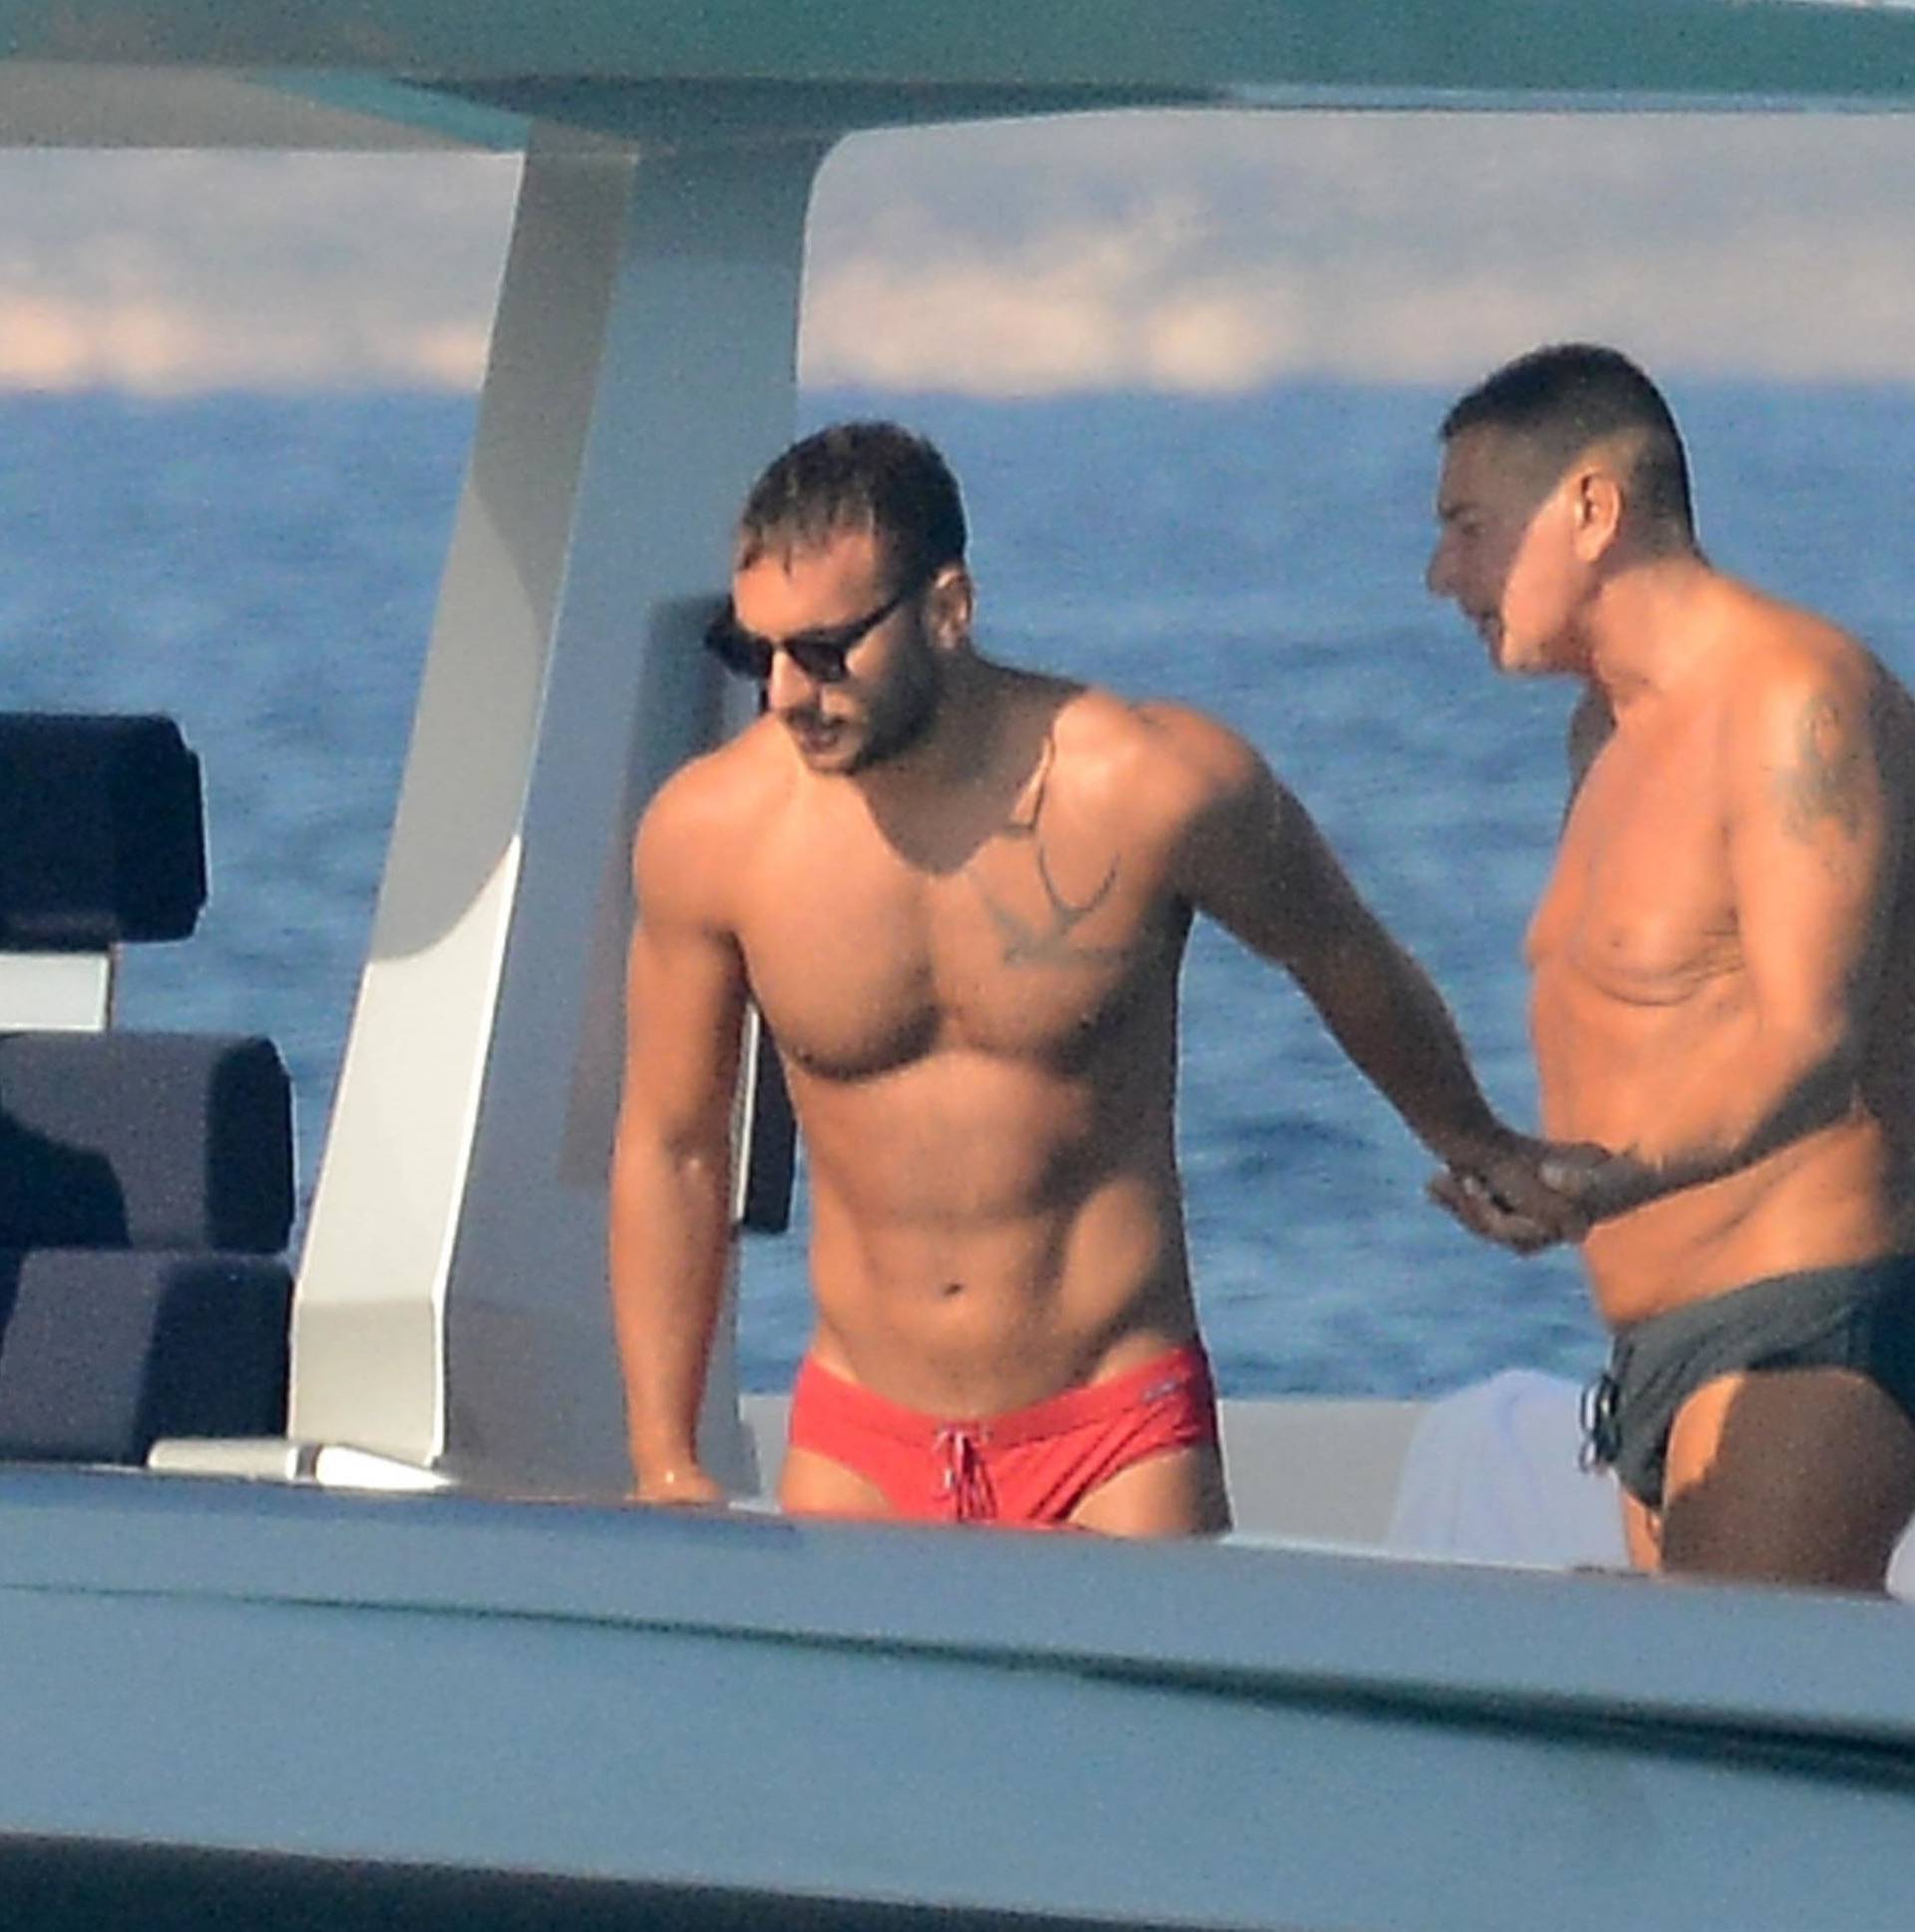 *EXCLUSIVE* The Italian fashion designer Stefano Gabbana enjoys his holidays out in Formentera with his boyfriend, the fitness instructor Luca Santonastaso.